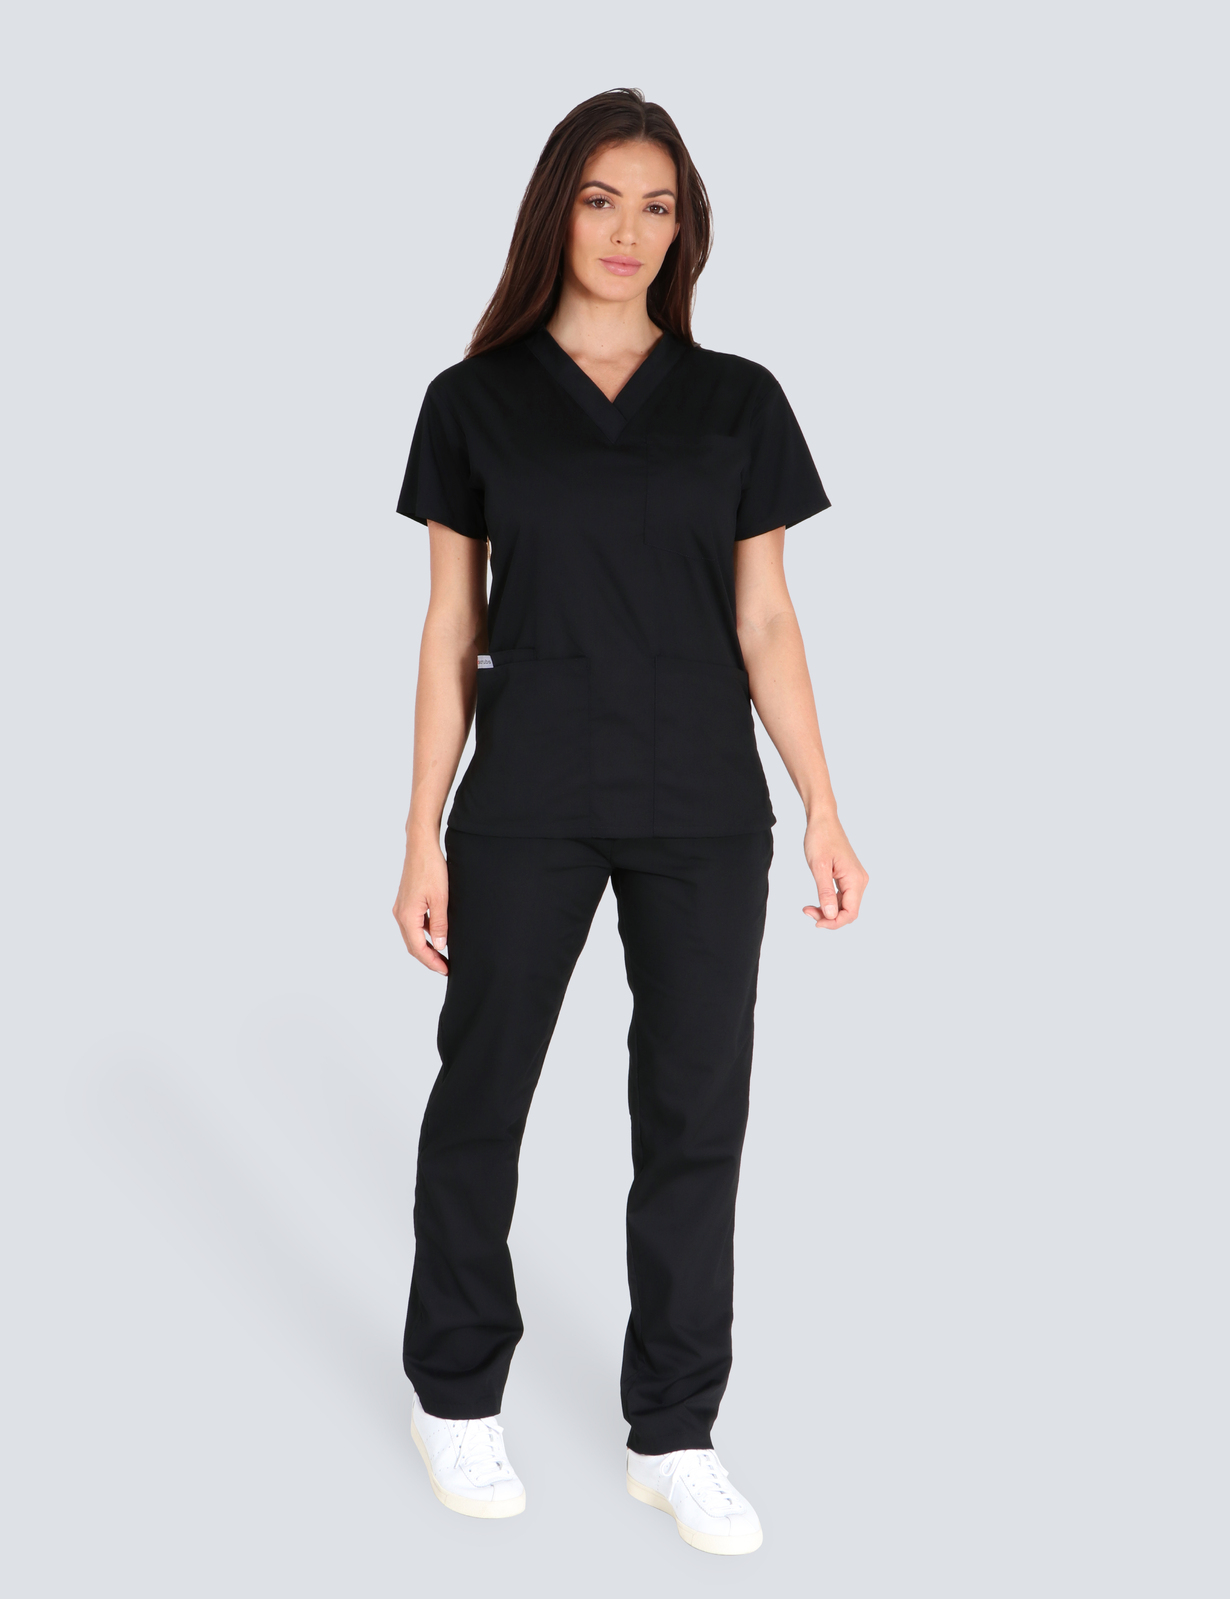 Logan Hospital - Medical Imaging (4 Pocket Scrub Top and Cargo Pants in Black incl Logos)